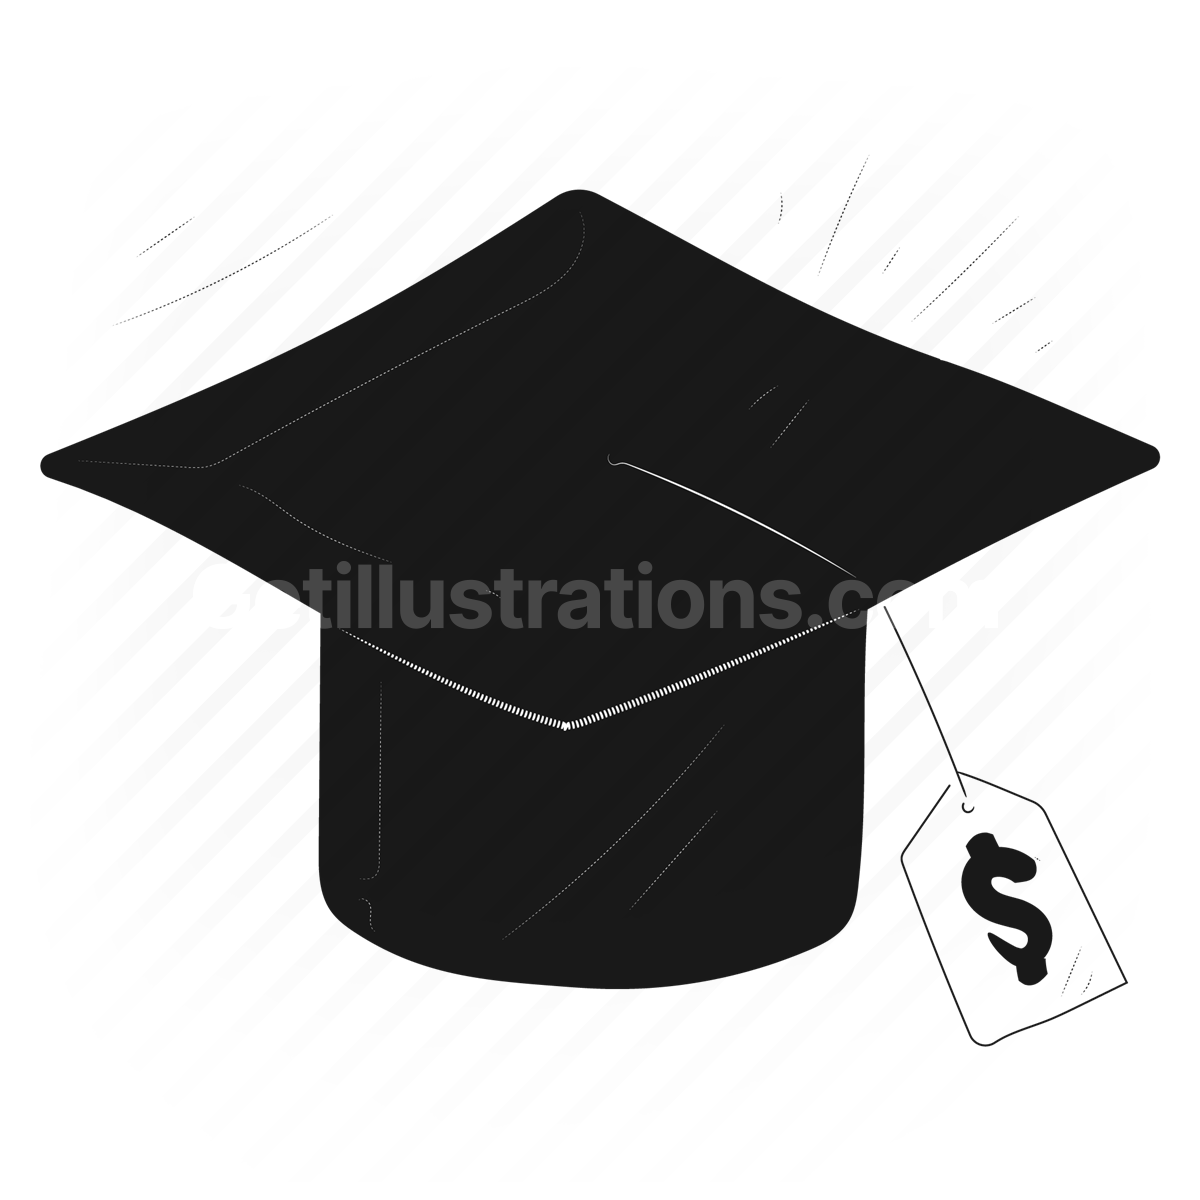 Education and training illustration